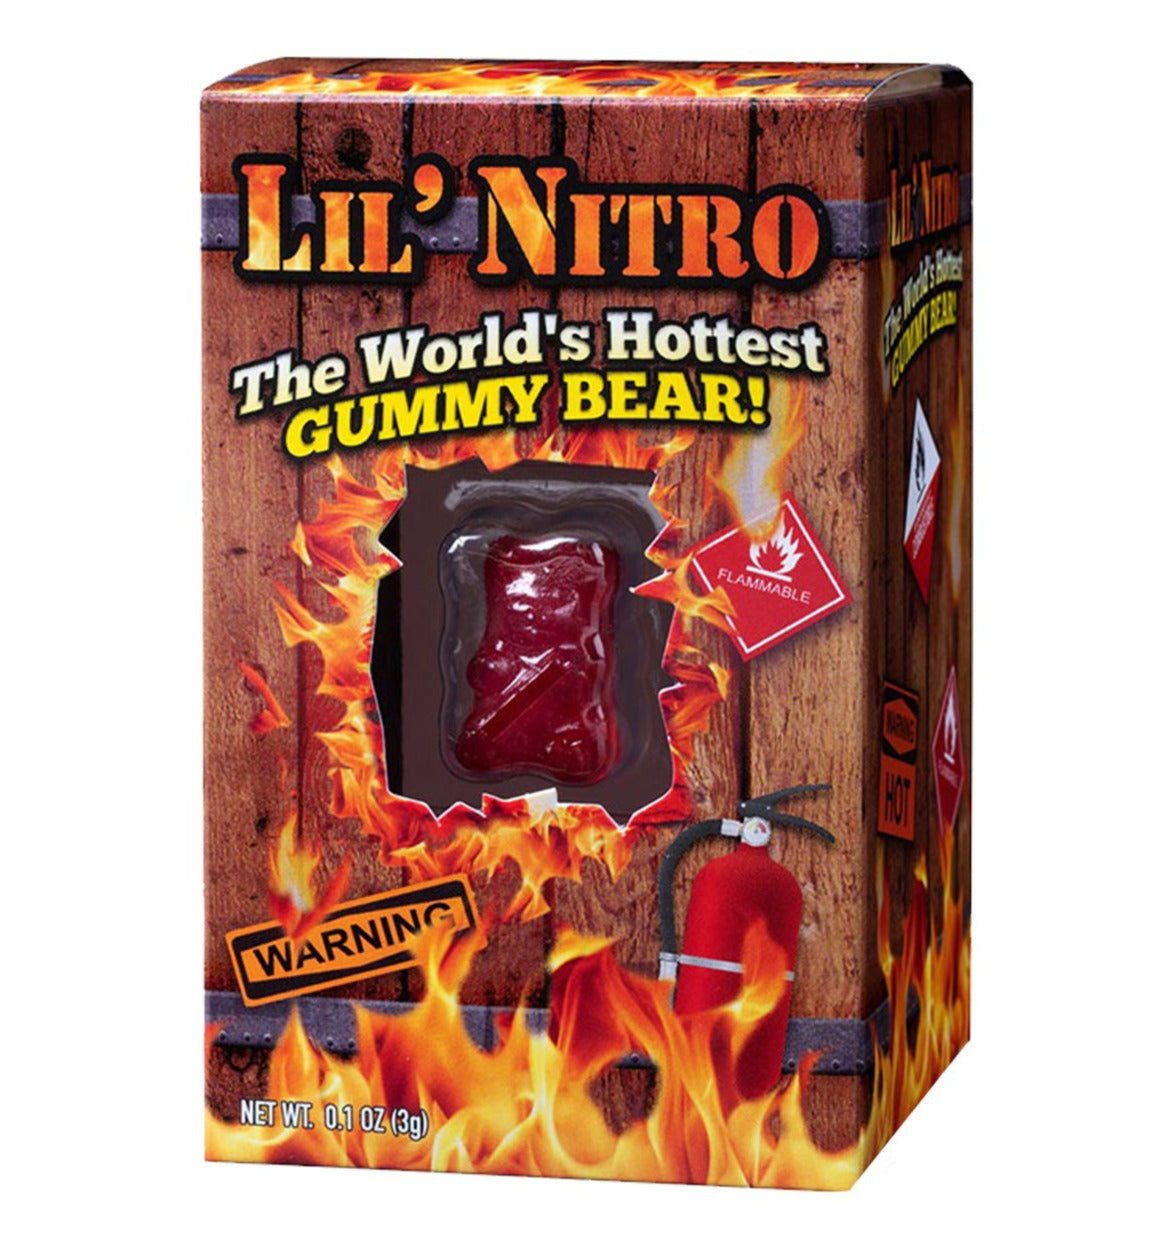 Lil Nitro - The Worlds Hottest Gummy Bear